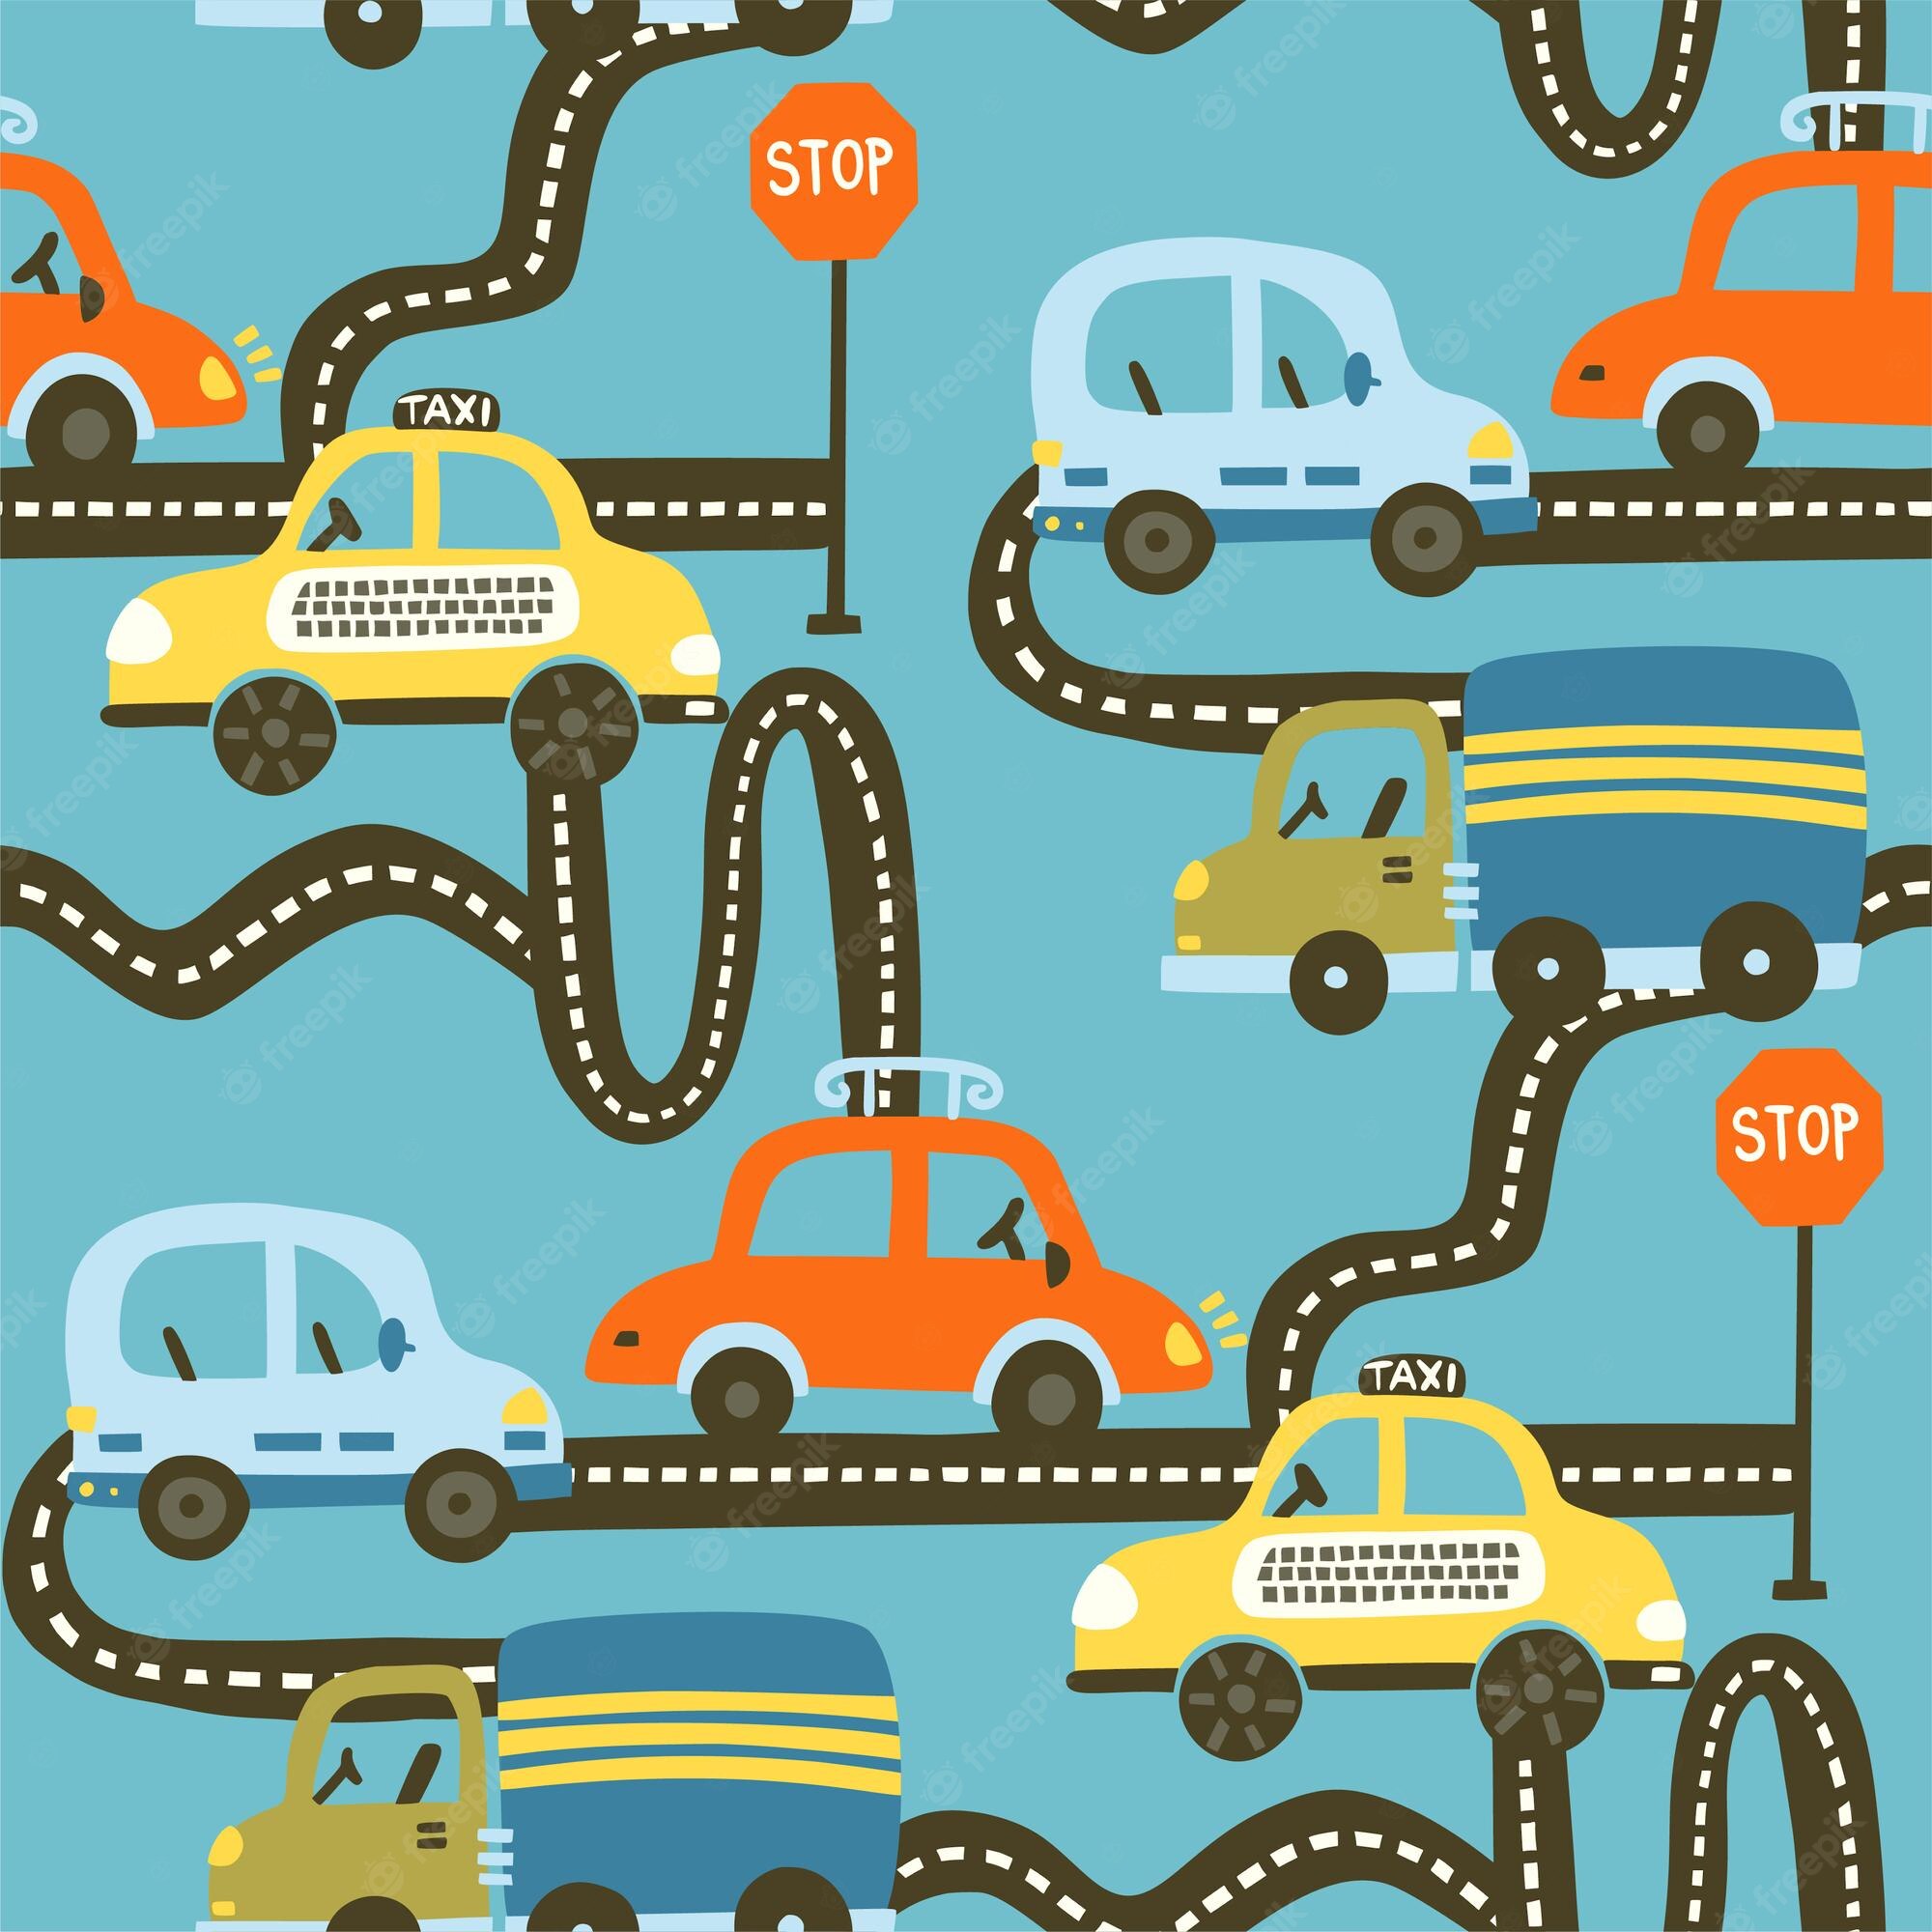 Cute Car Wallpapers